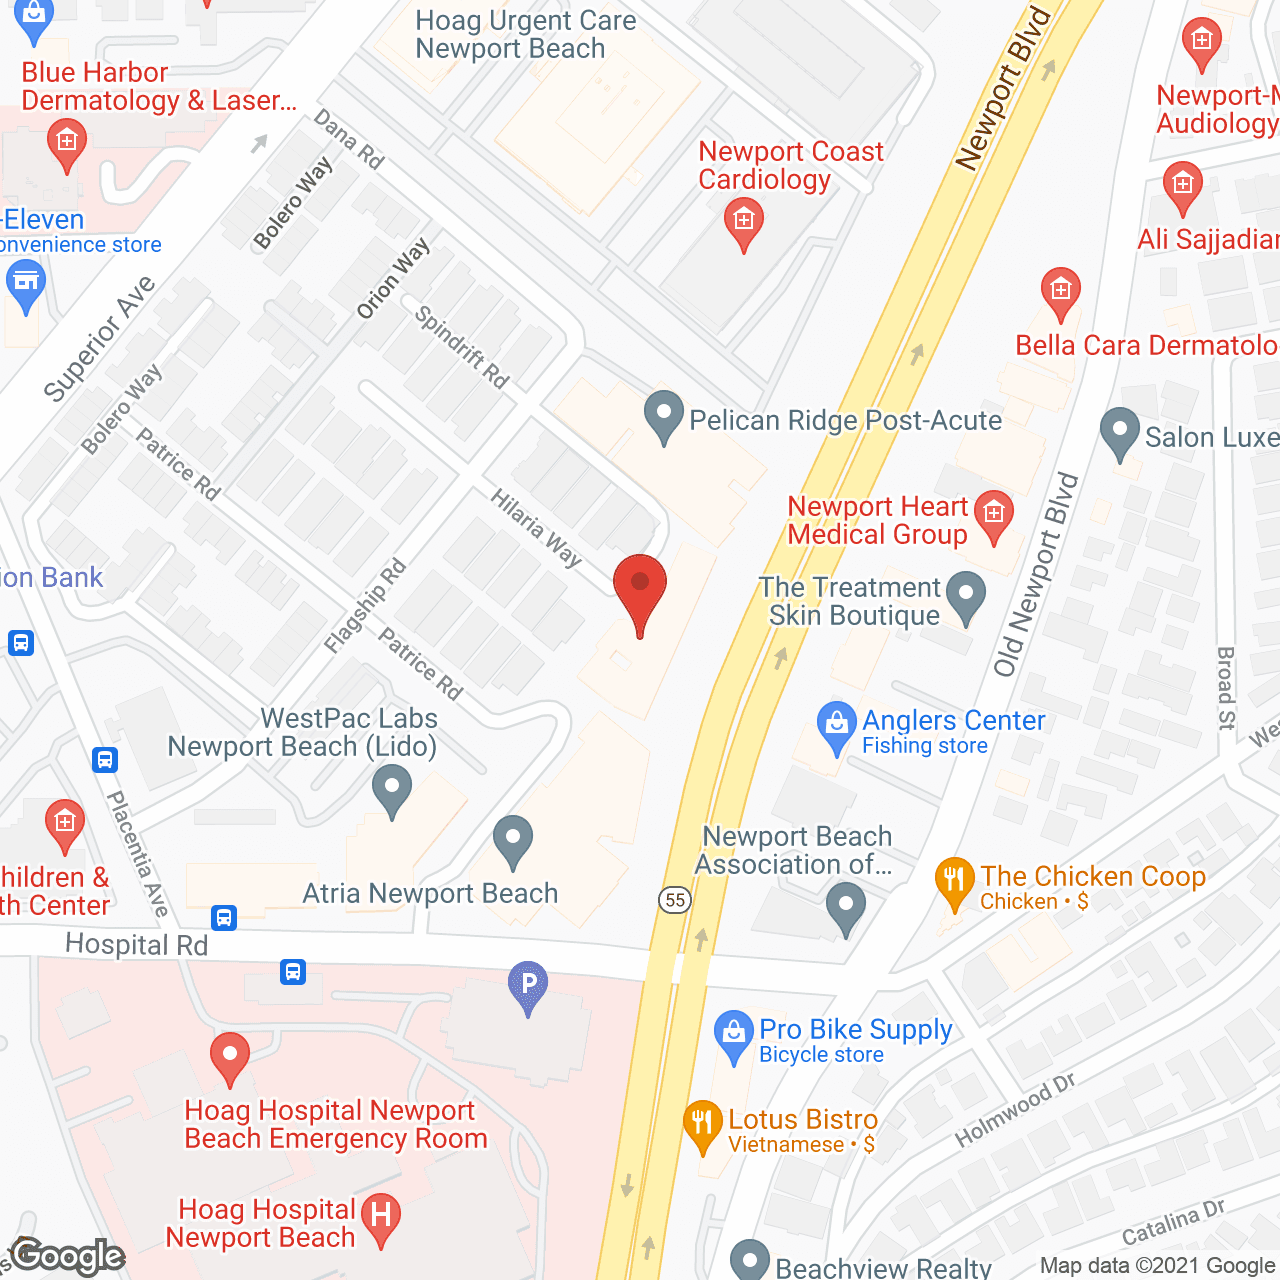 Newport Villa in google map